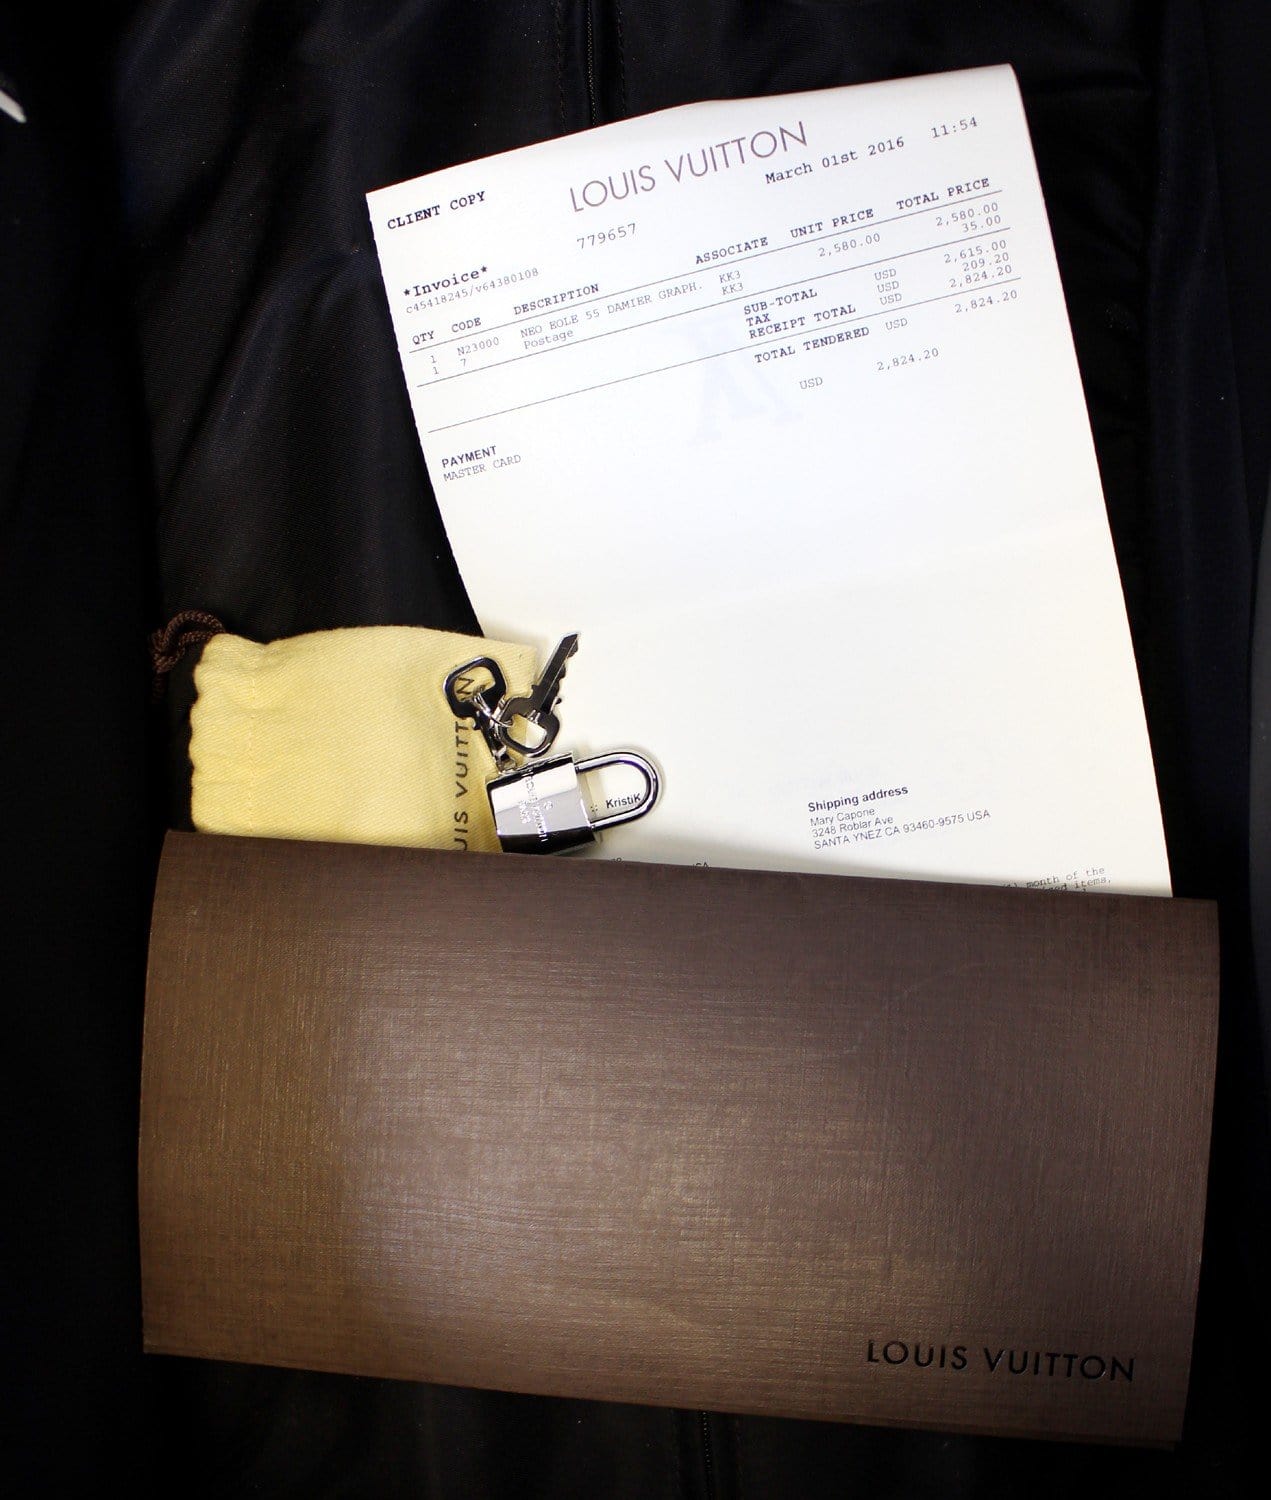 Authentic Louis Vuitton 2019 Duffle Bag with receipt $2475 + Tax